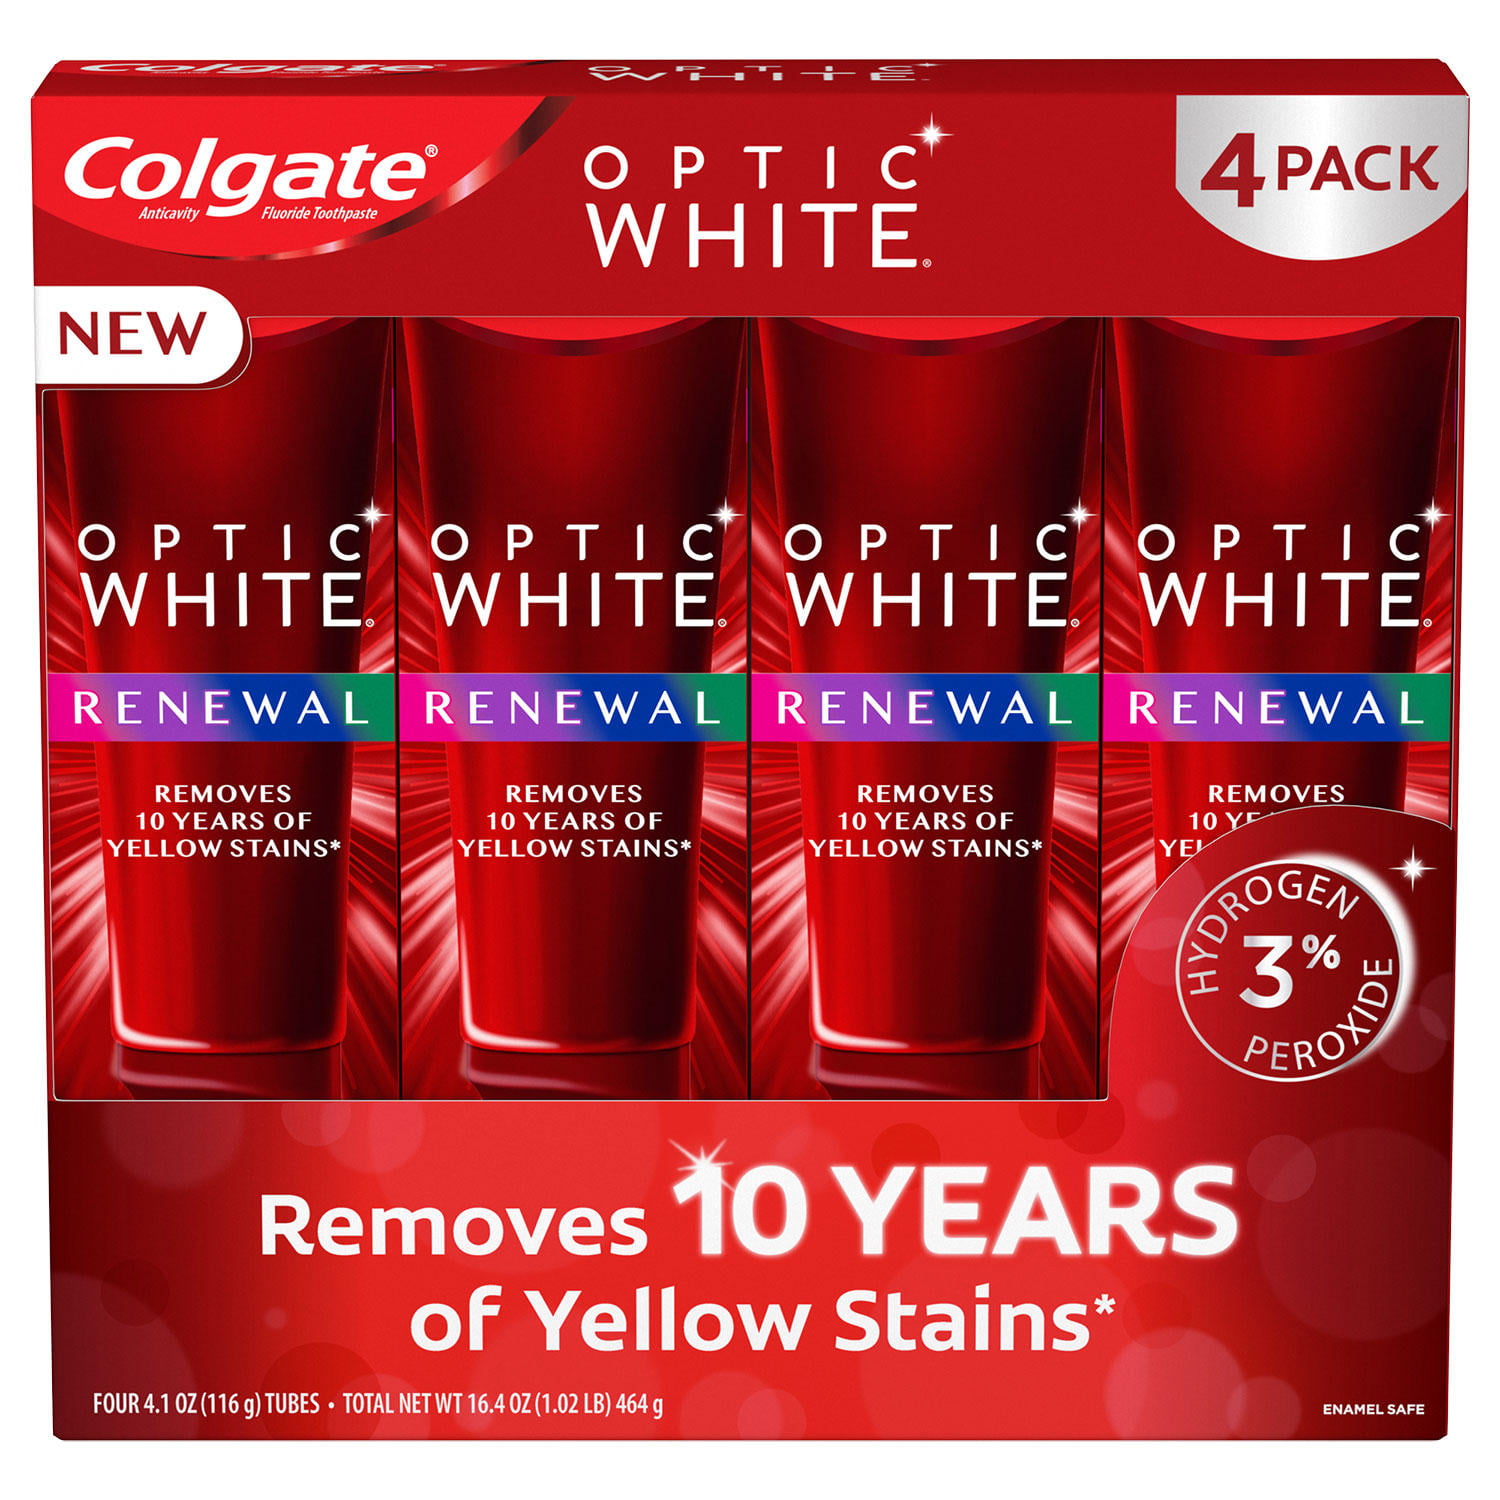 colgate-optic-white-renewal-high-impact-white-teeth-whitening